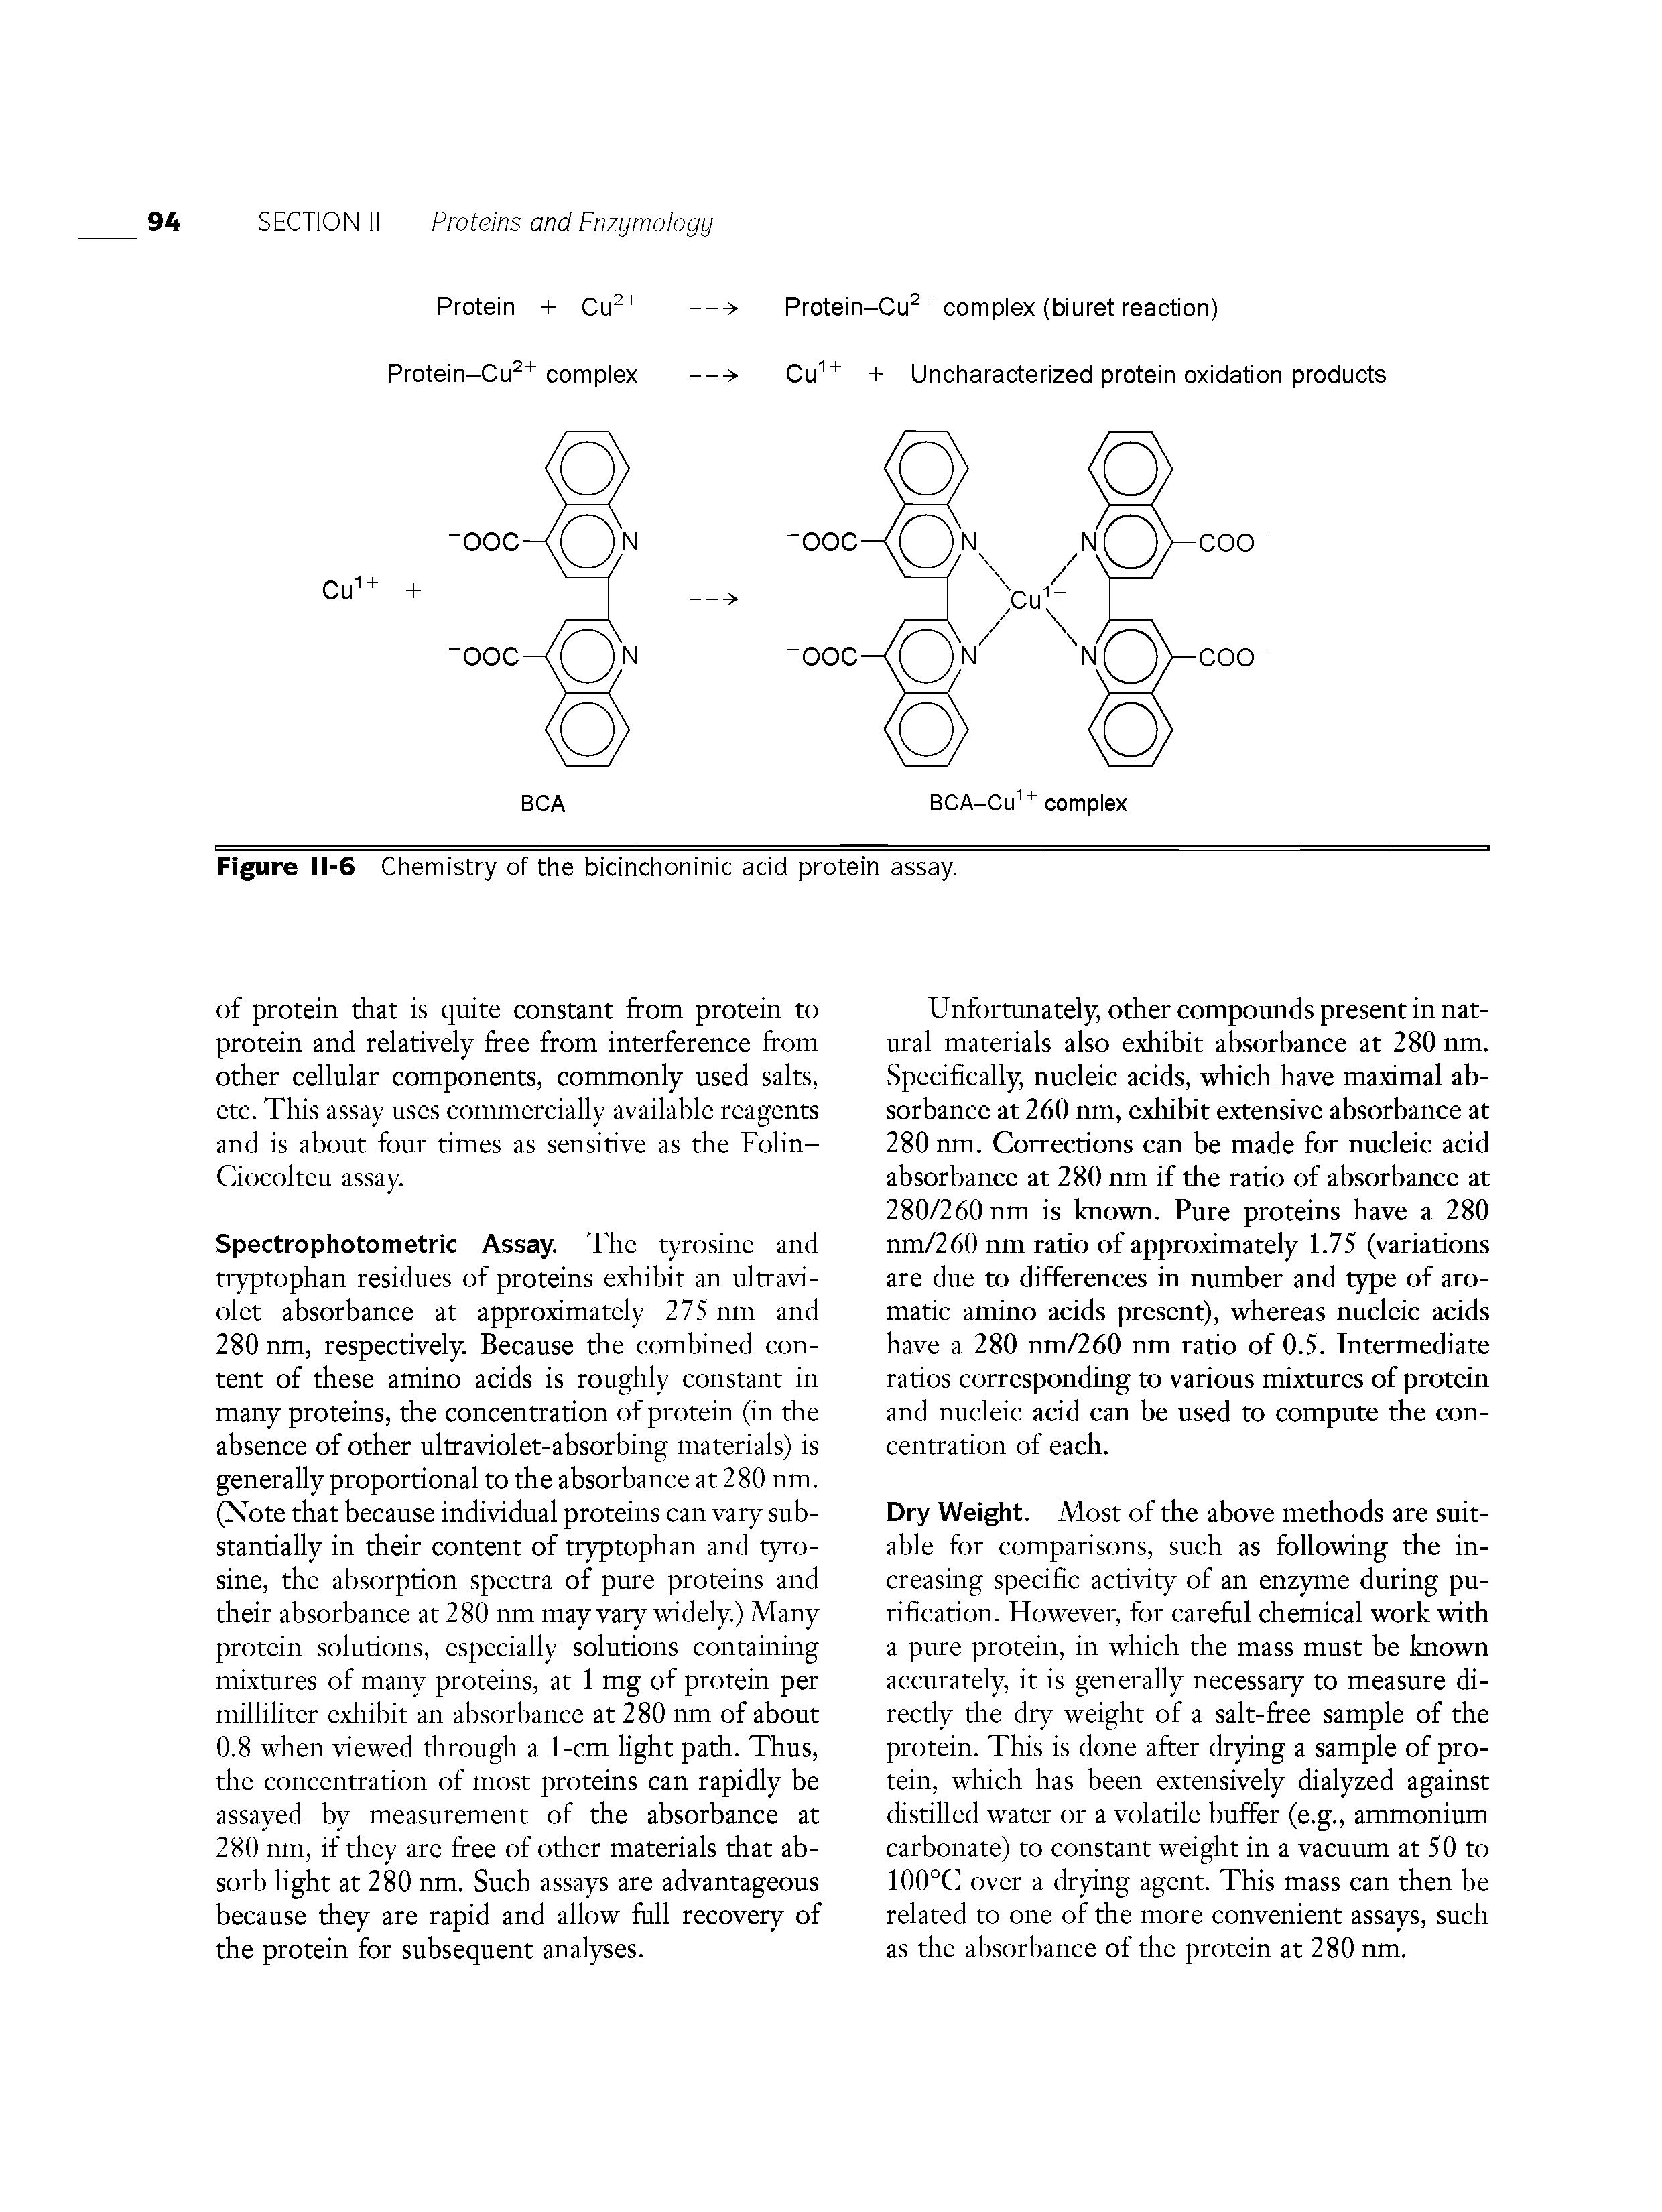 Figure II-6 Chemistry of the bicinchoninic acid protein assay.